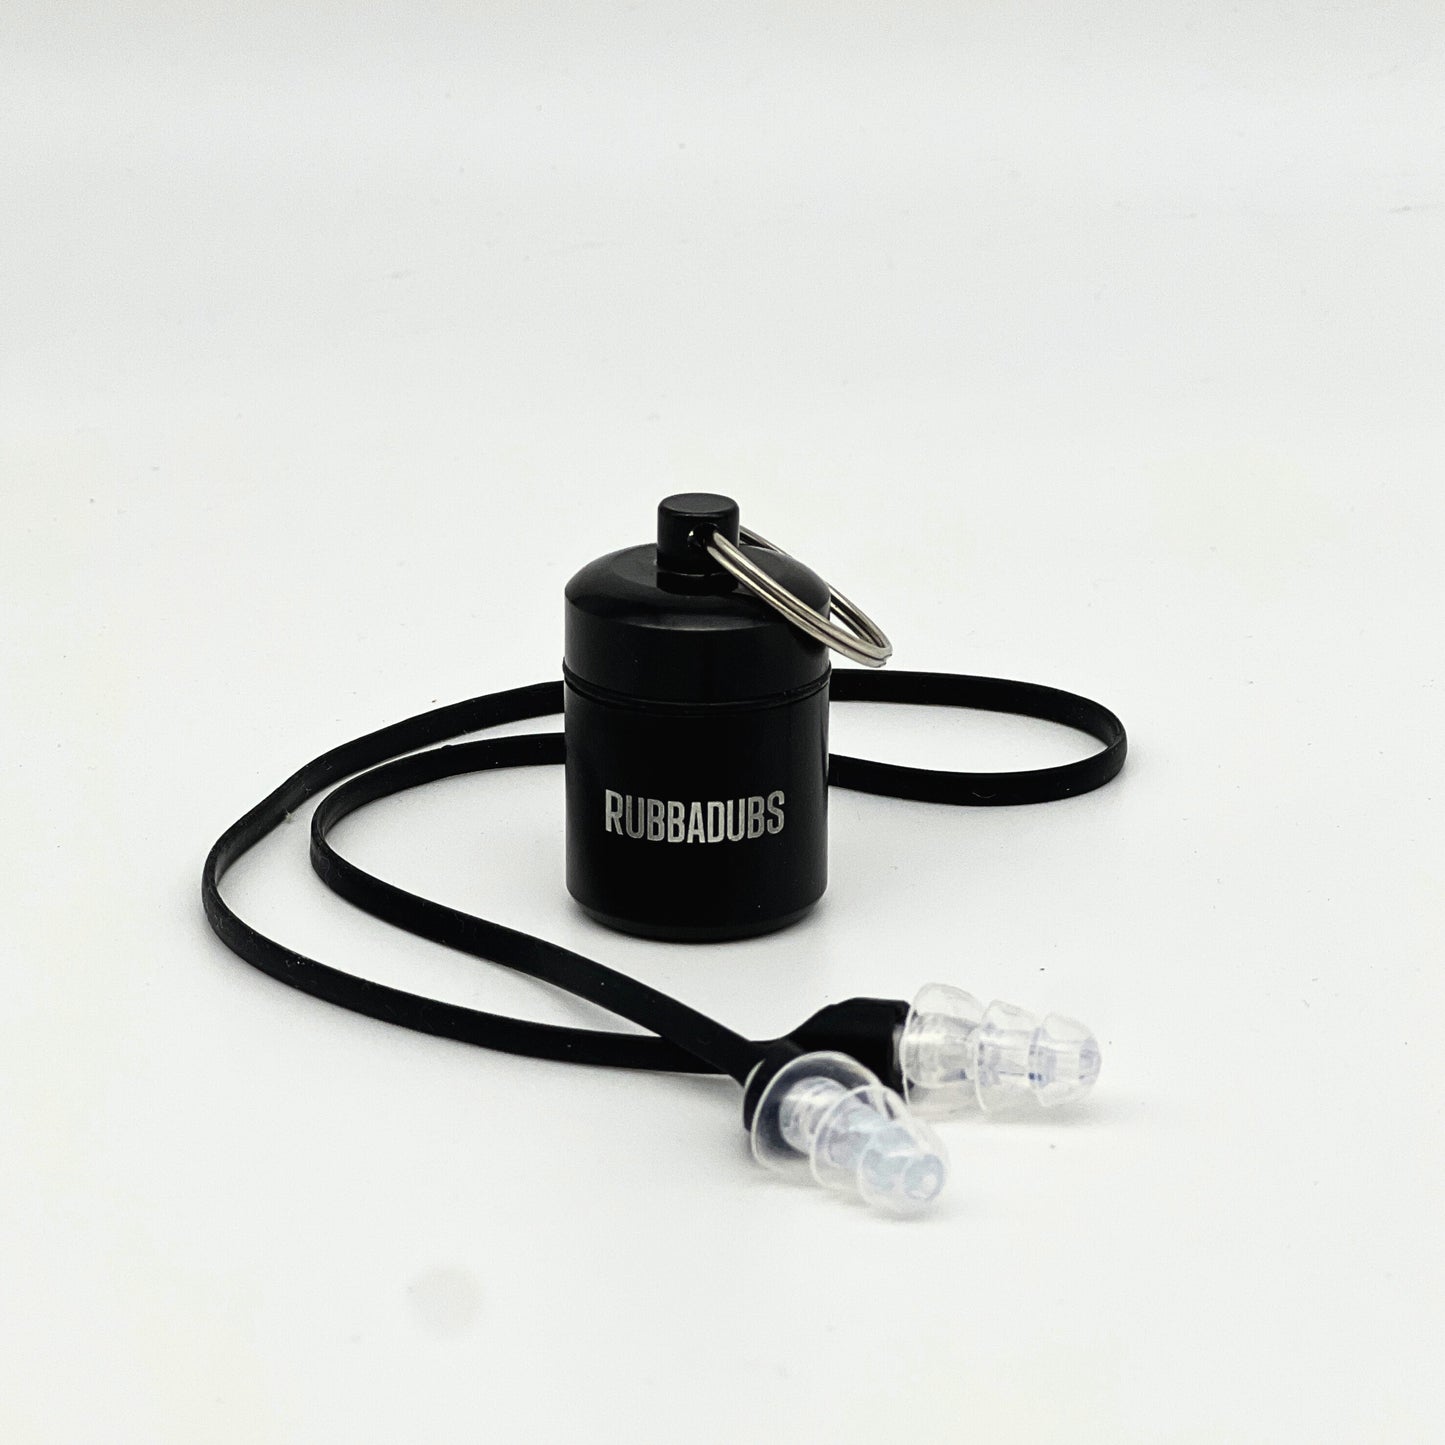 Rubbadubs High Fidelity Ear Plugs - Compact Case